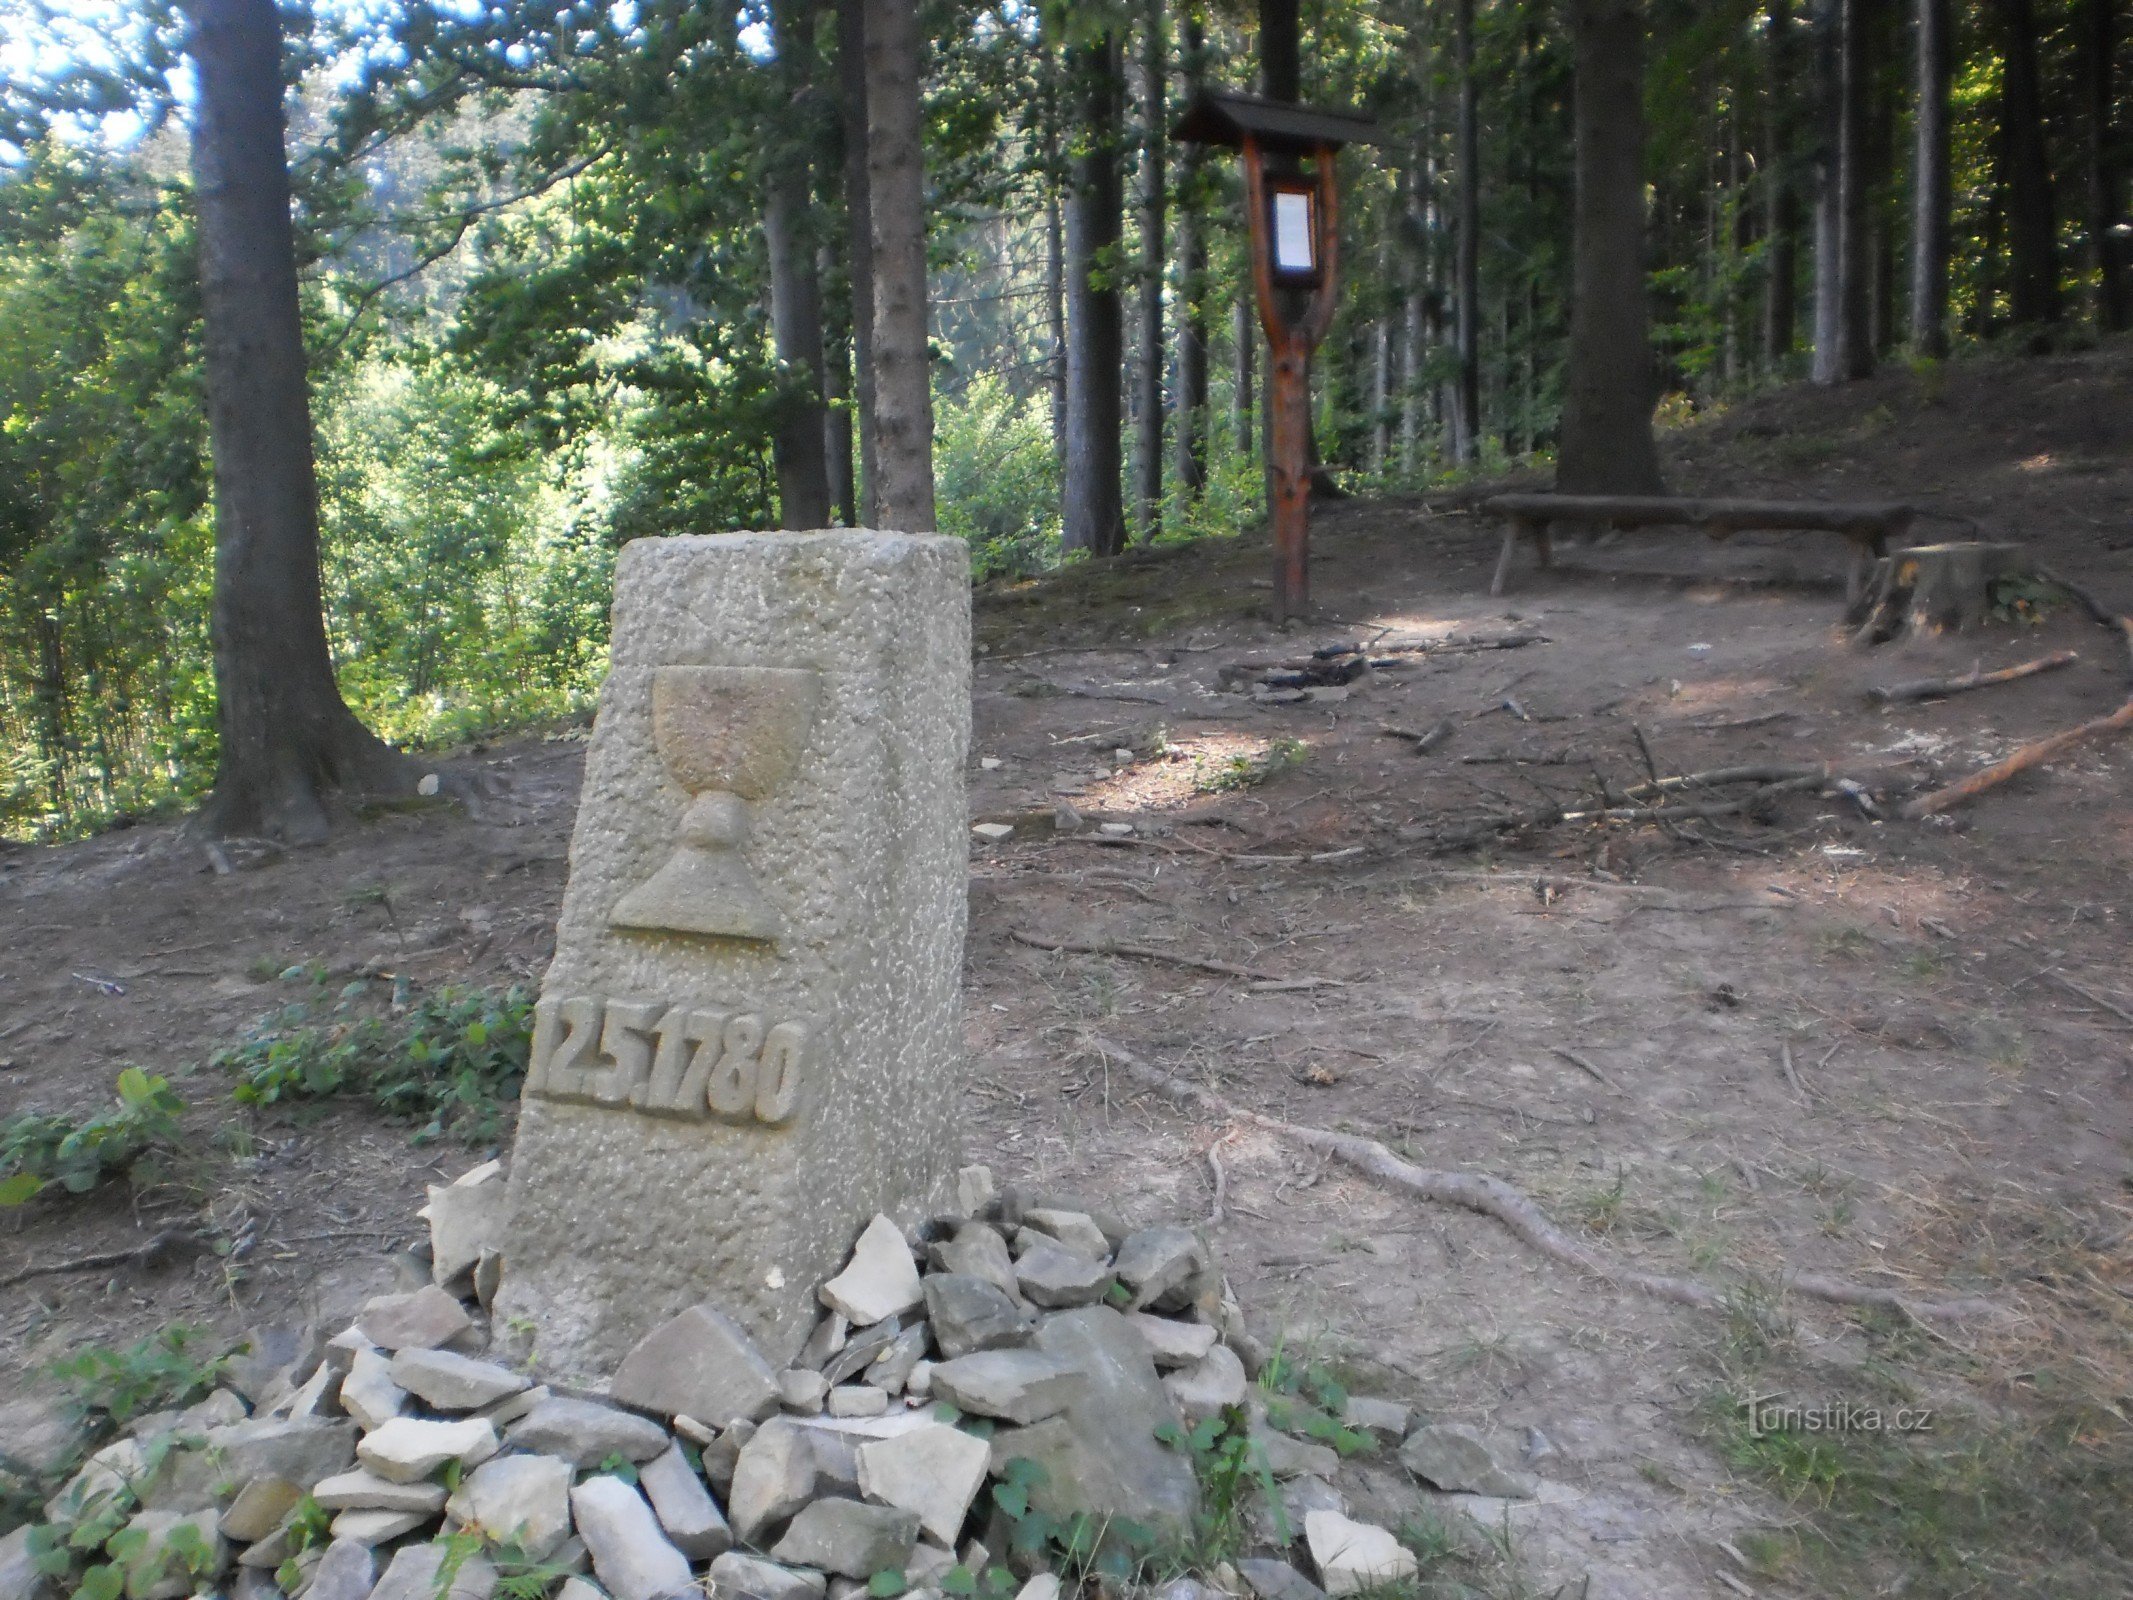 Memorial to the secret meeting of evangelicals in Seninka in Vsetínsk